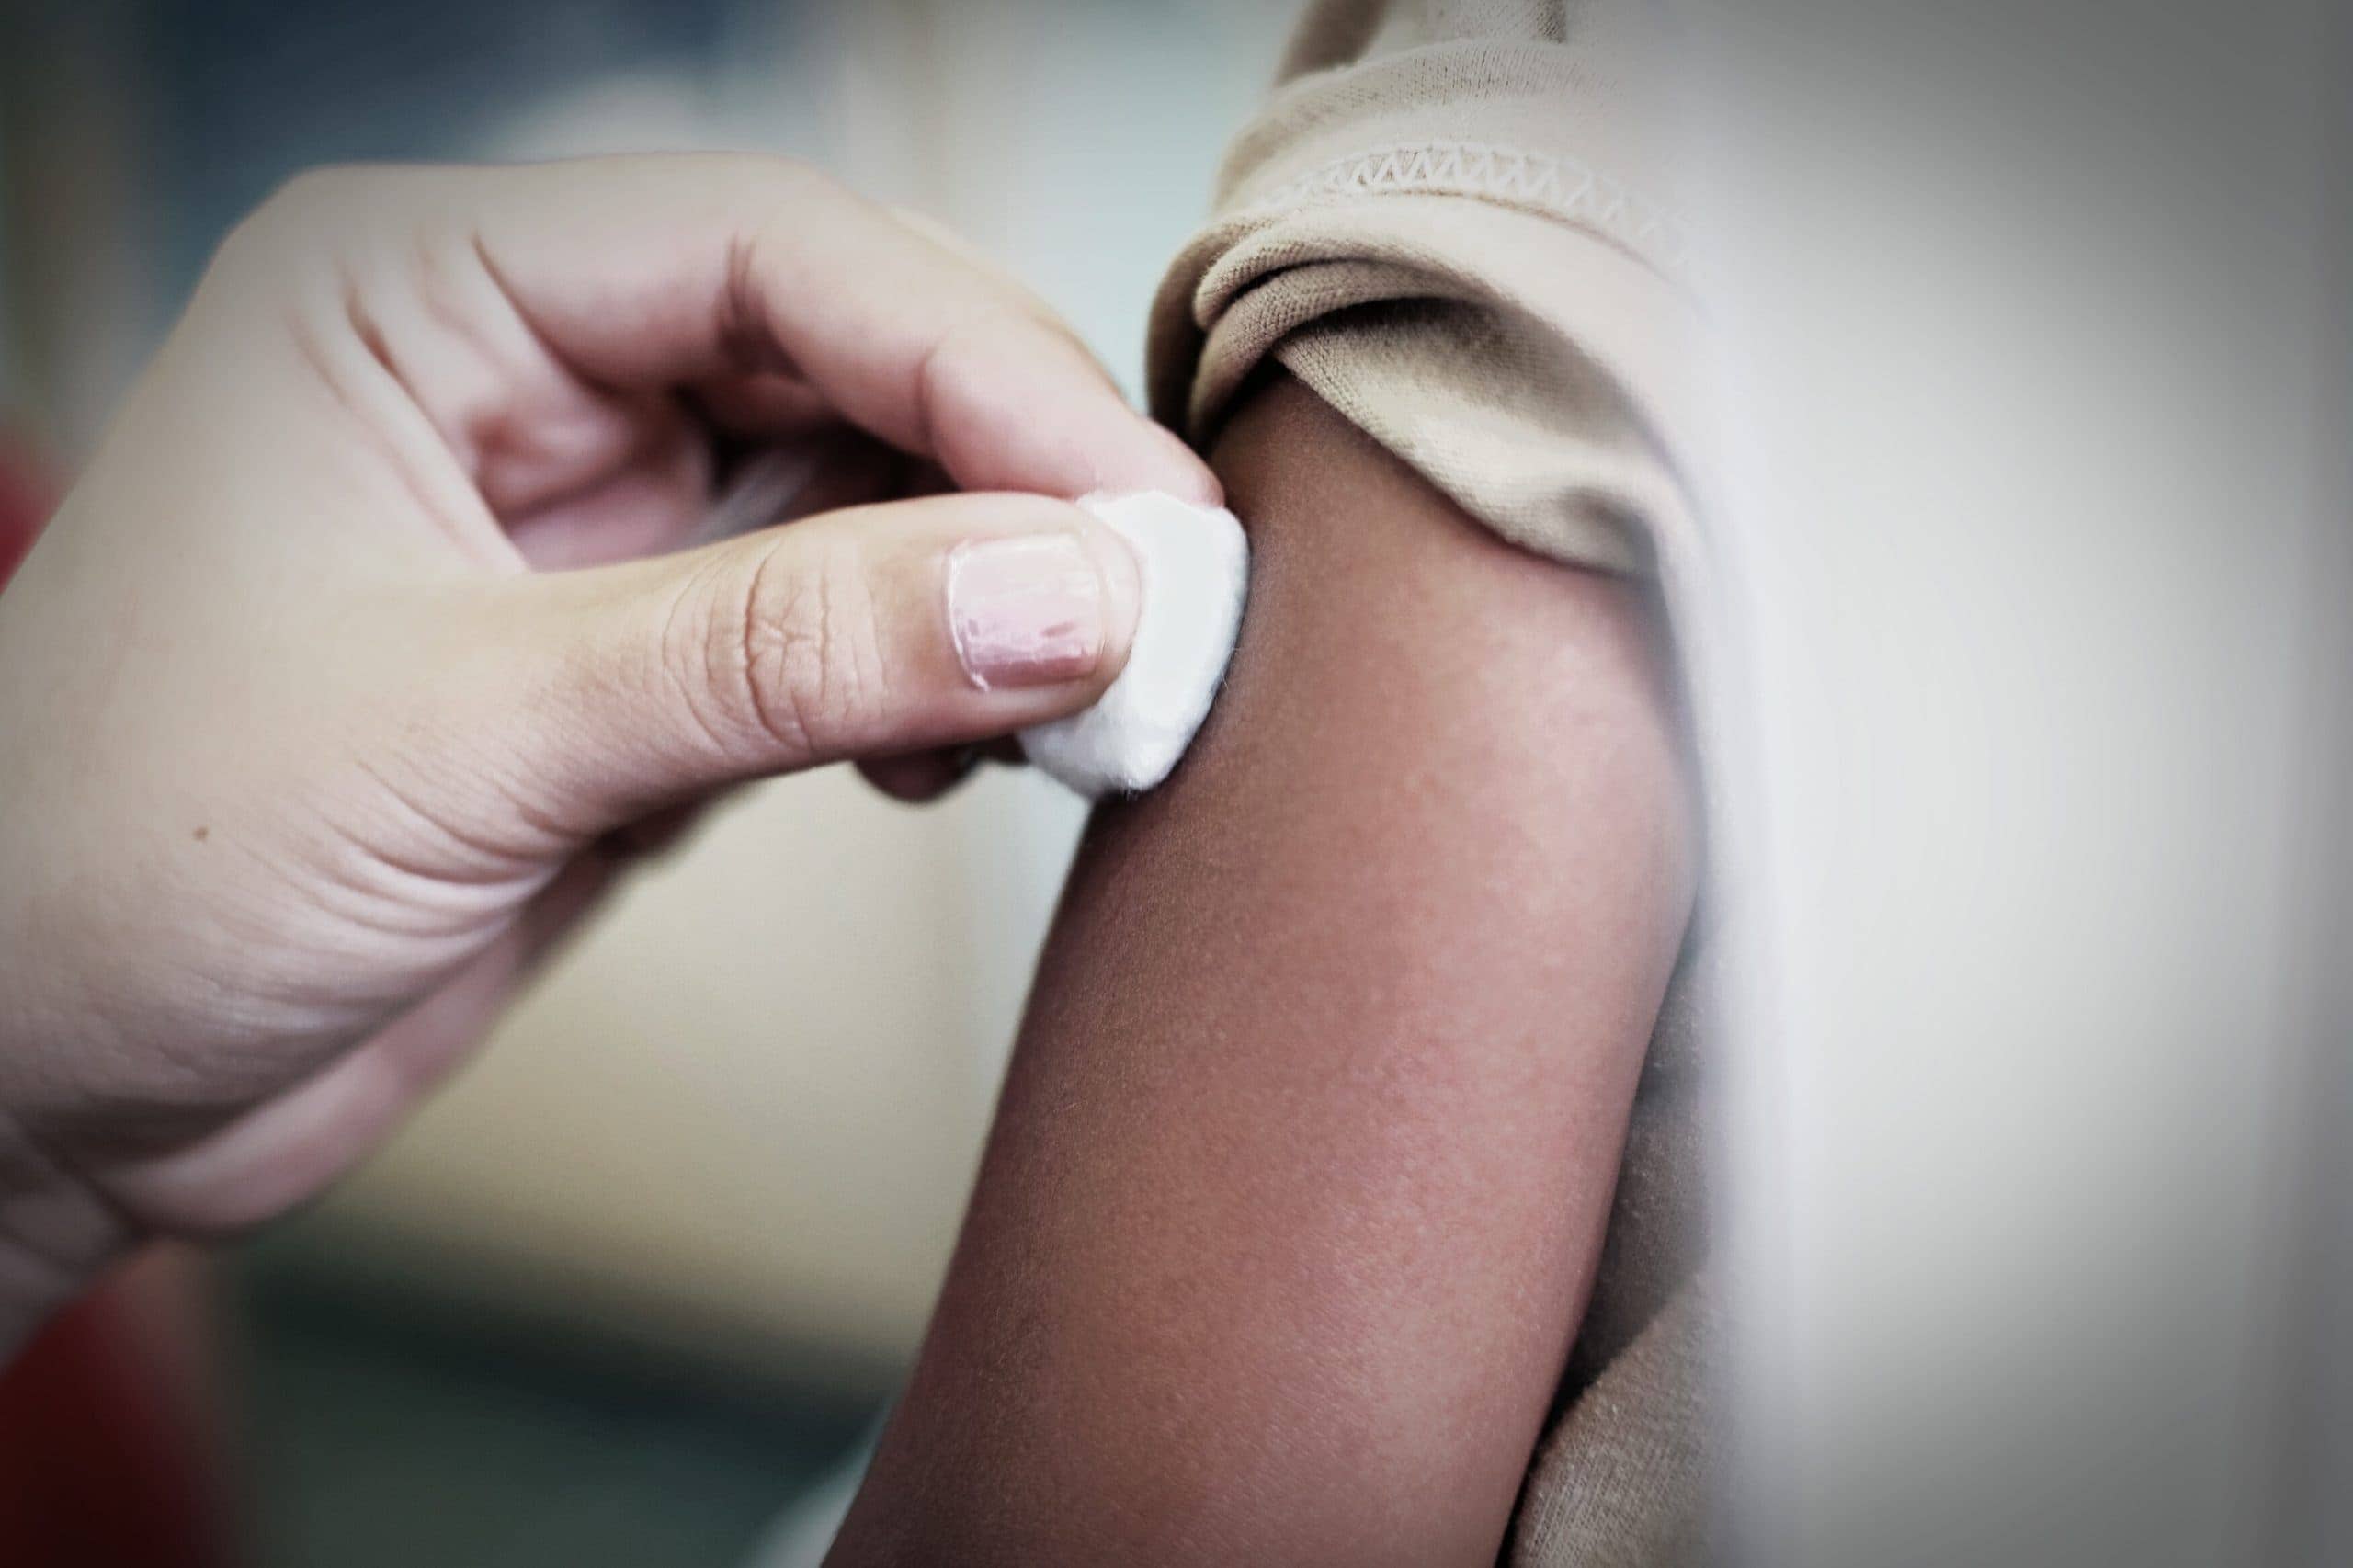 Moderna Begins Research for COVID Vaccine in Children